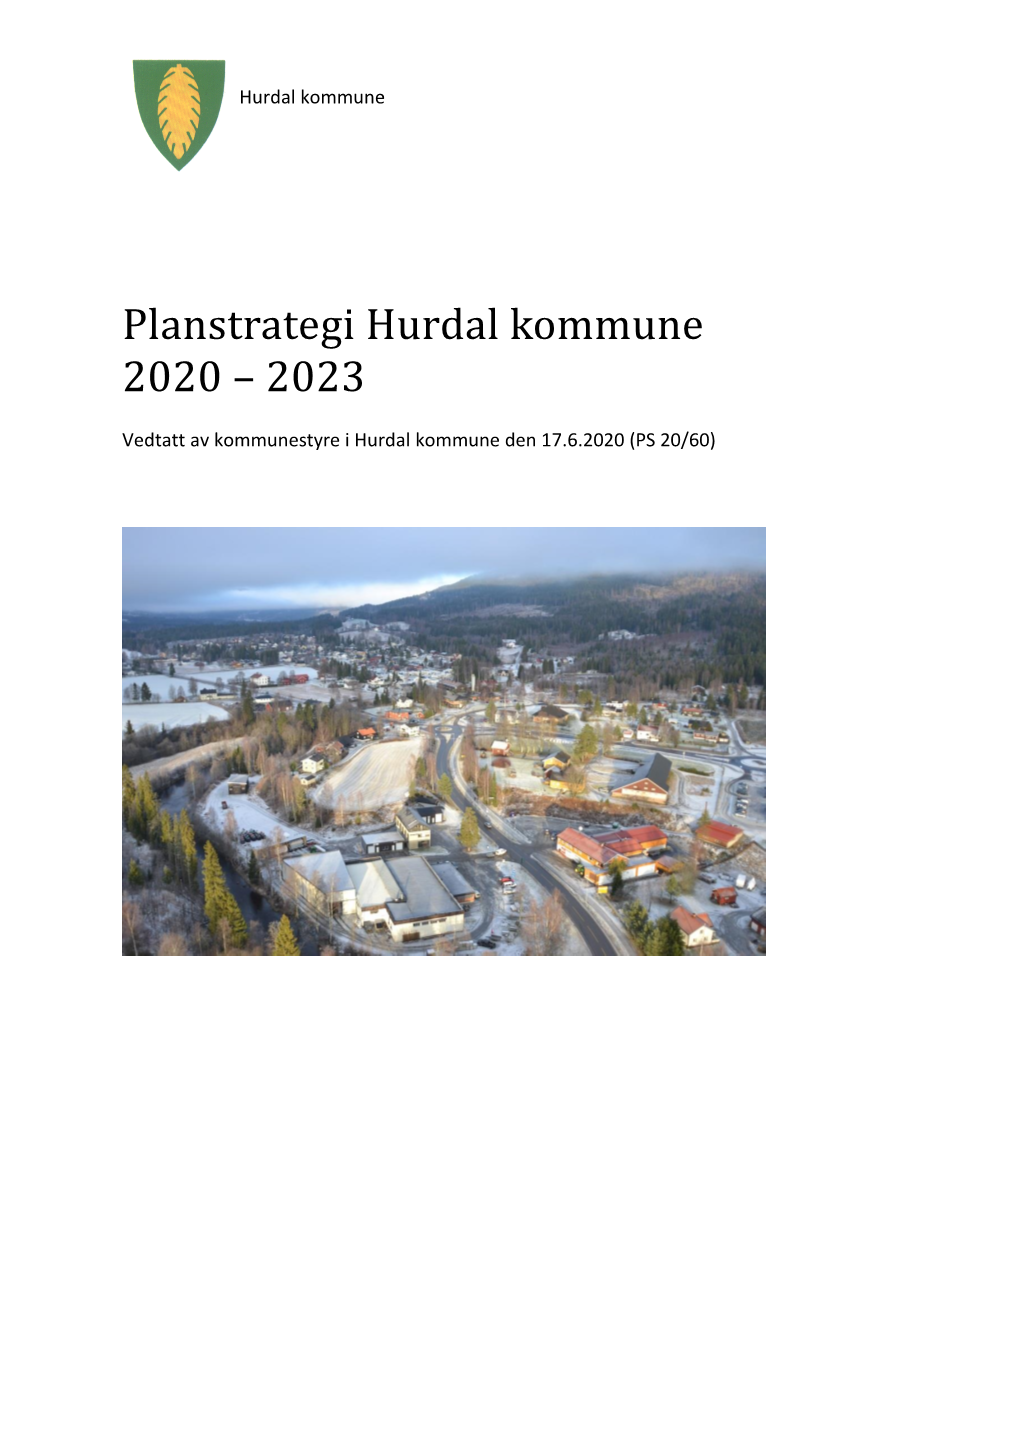 Planstrategi Hurdal Kommune 2020 – 2023